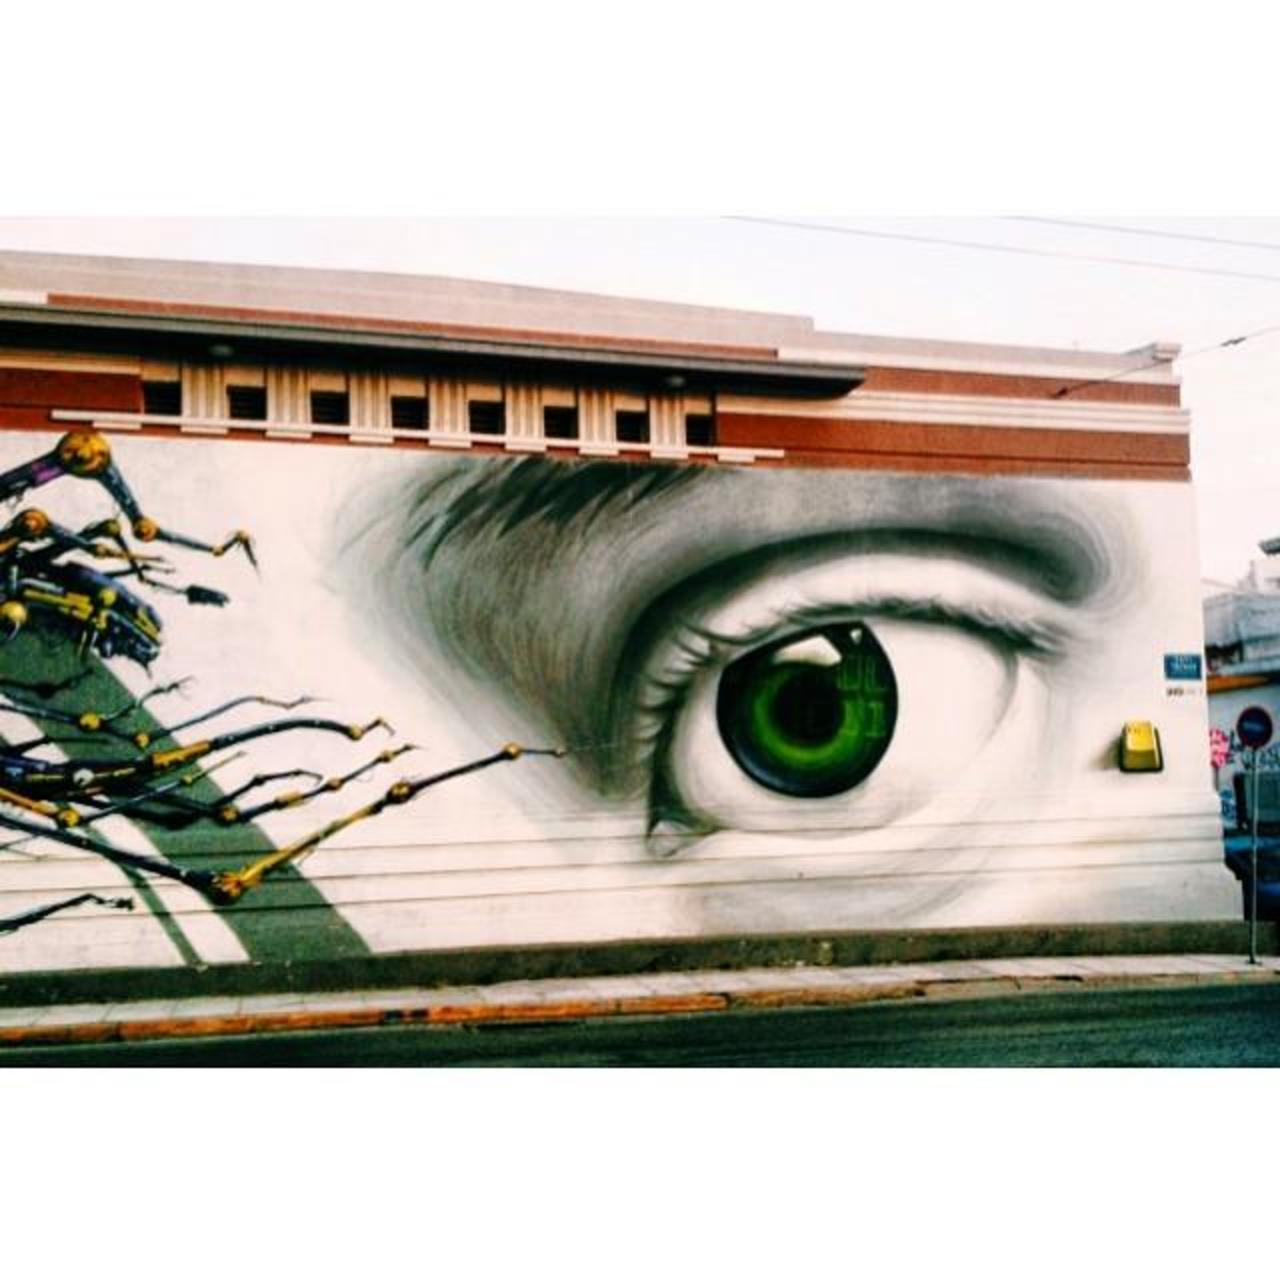 #street #streetart #ino #instagraffiti #graffiti #city #art #texnopolis #gkazi #athens #at… http://ift.tt/1HHXrdI http://t.co/SzcOBZ2prU